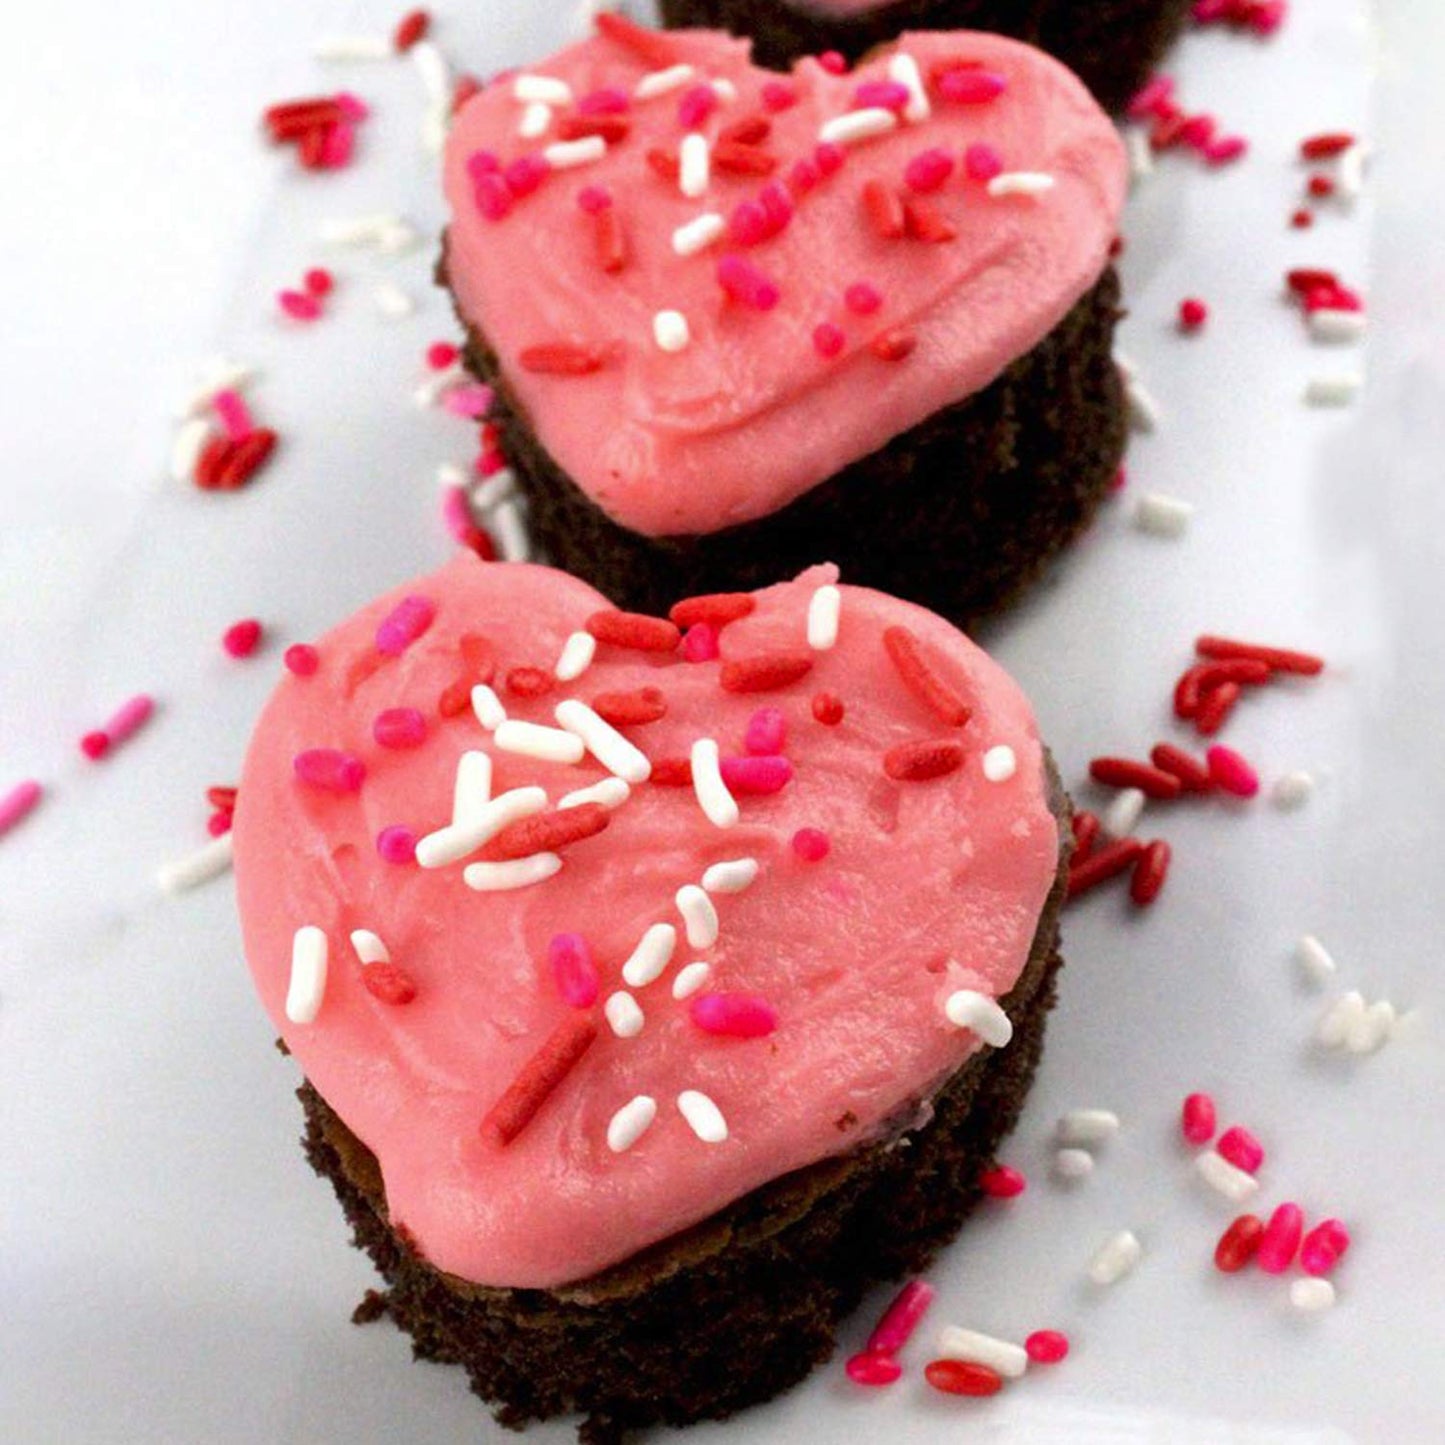 A Great Surprise Valentines Sprinkles - 16 Oz - Red, Pink & White Sprinkles - Bulk Jimmies